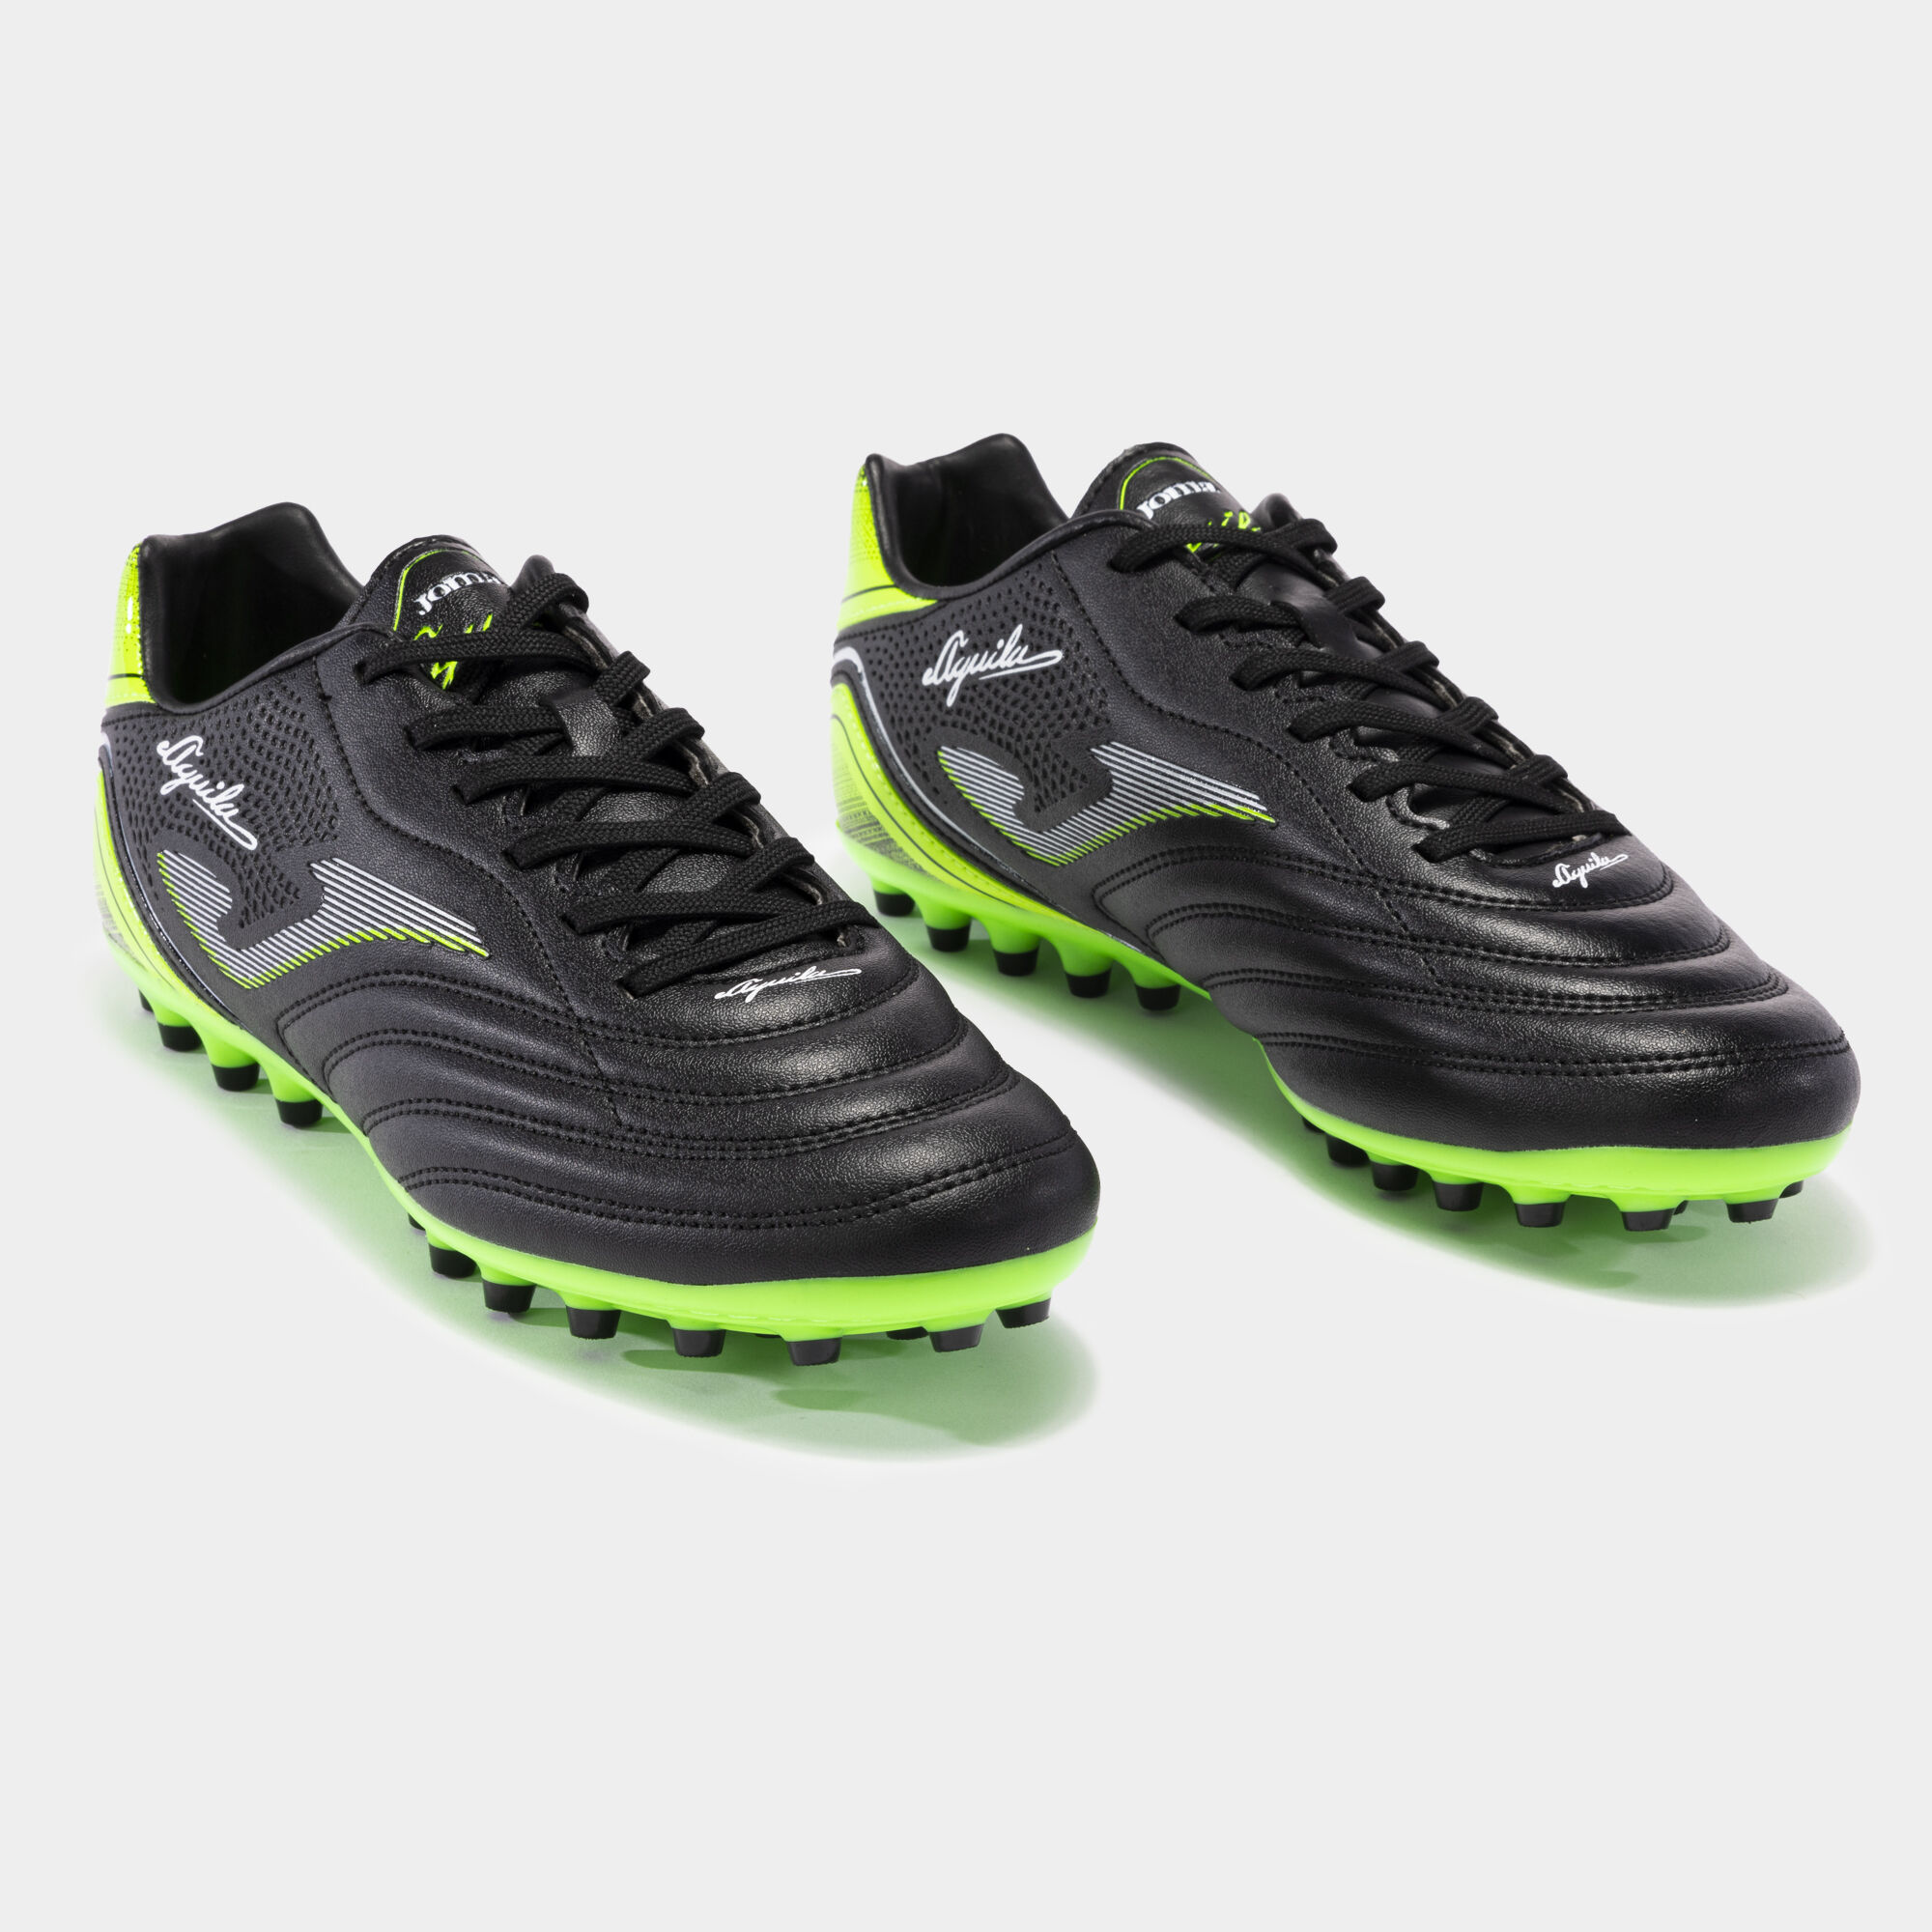 Chaussures football Aguila 22 gazon synthétique AG noir vert fluo